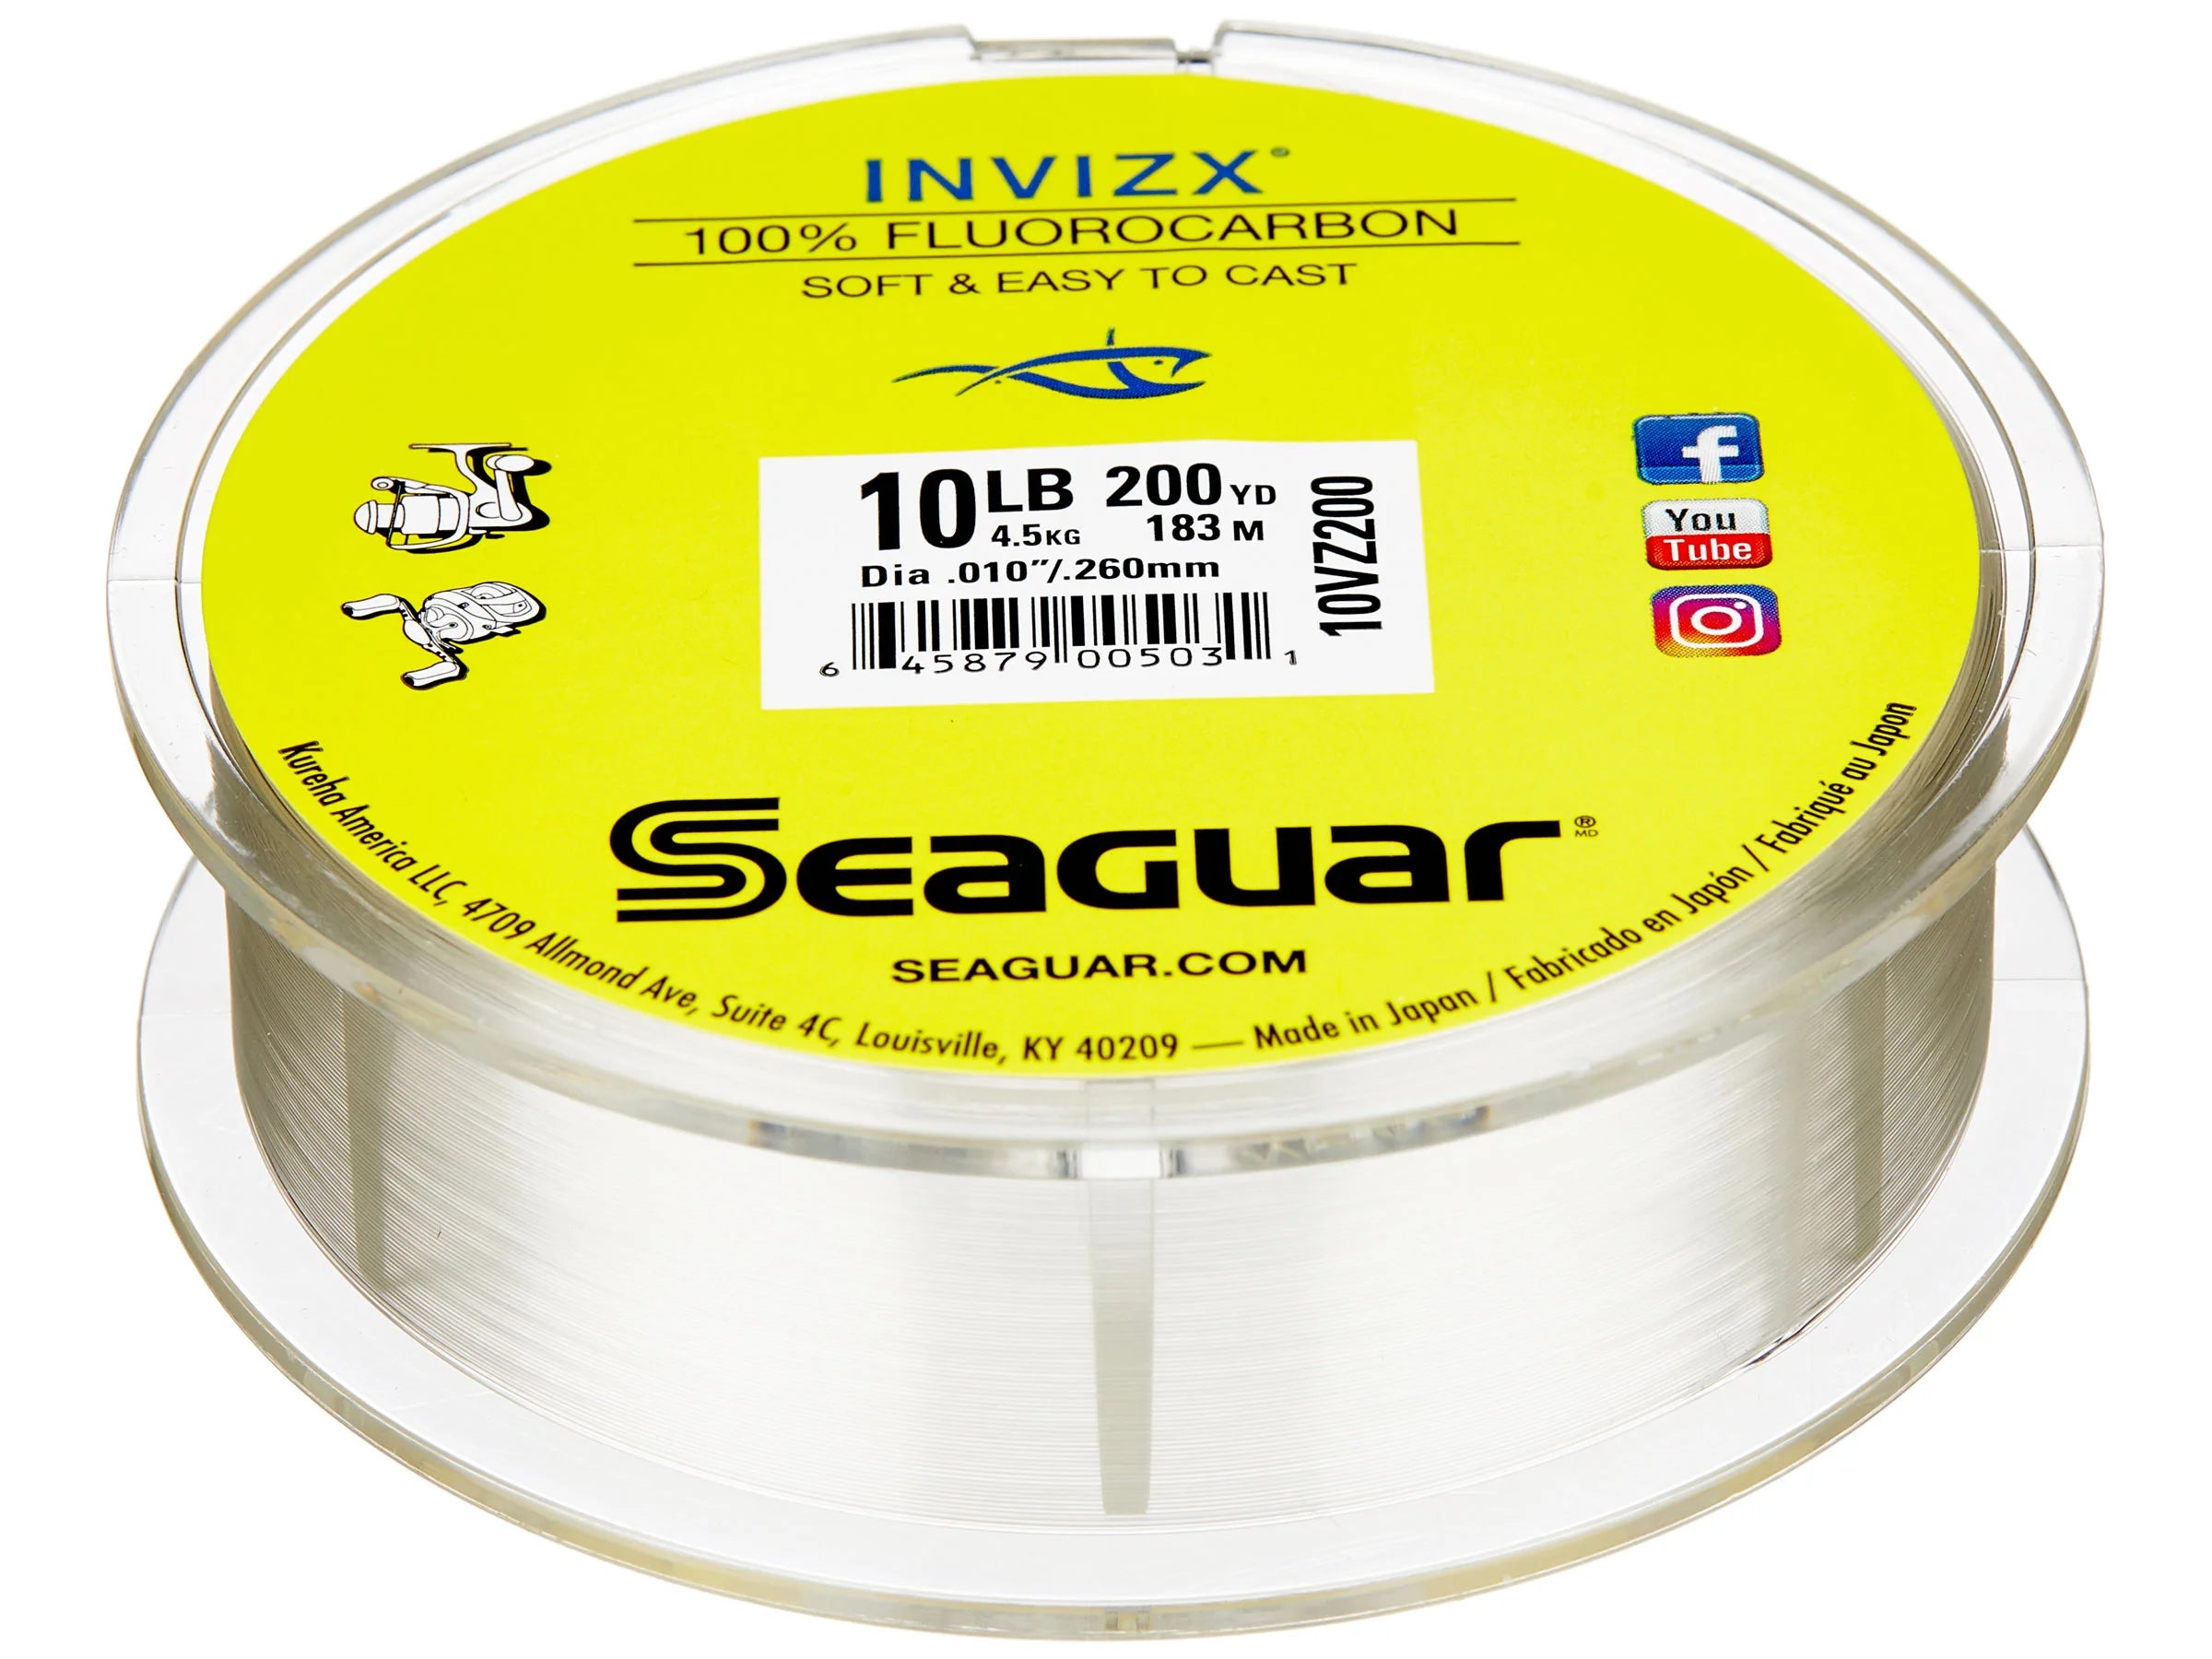 Seaguar Smackdown 100 Fluorocarbon Fishing Line Stealth Gray Braid